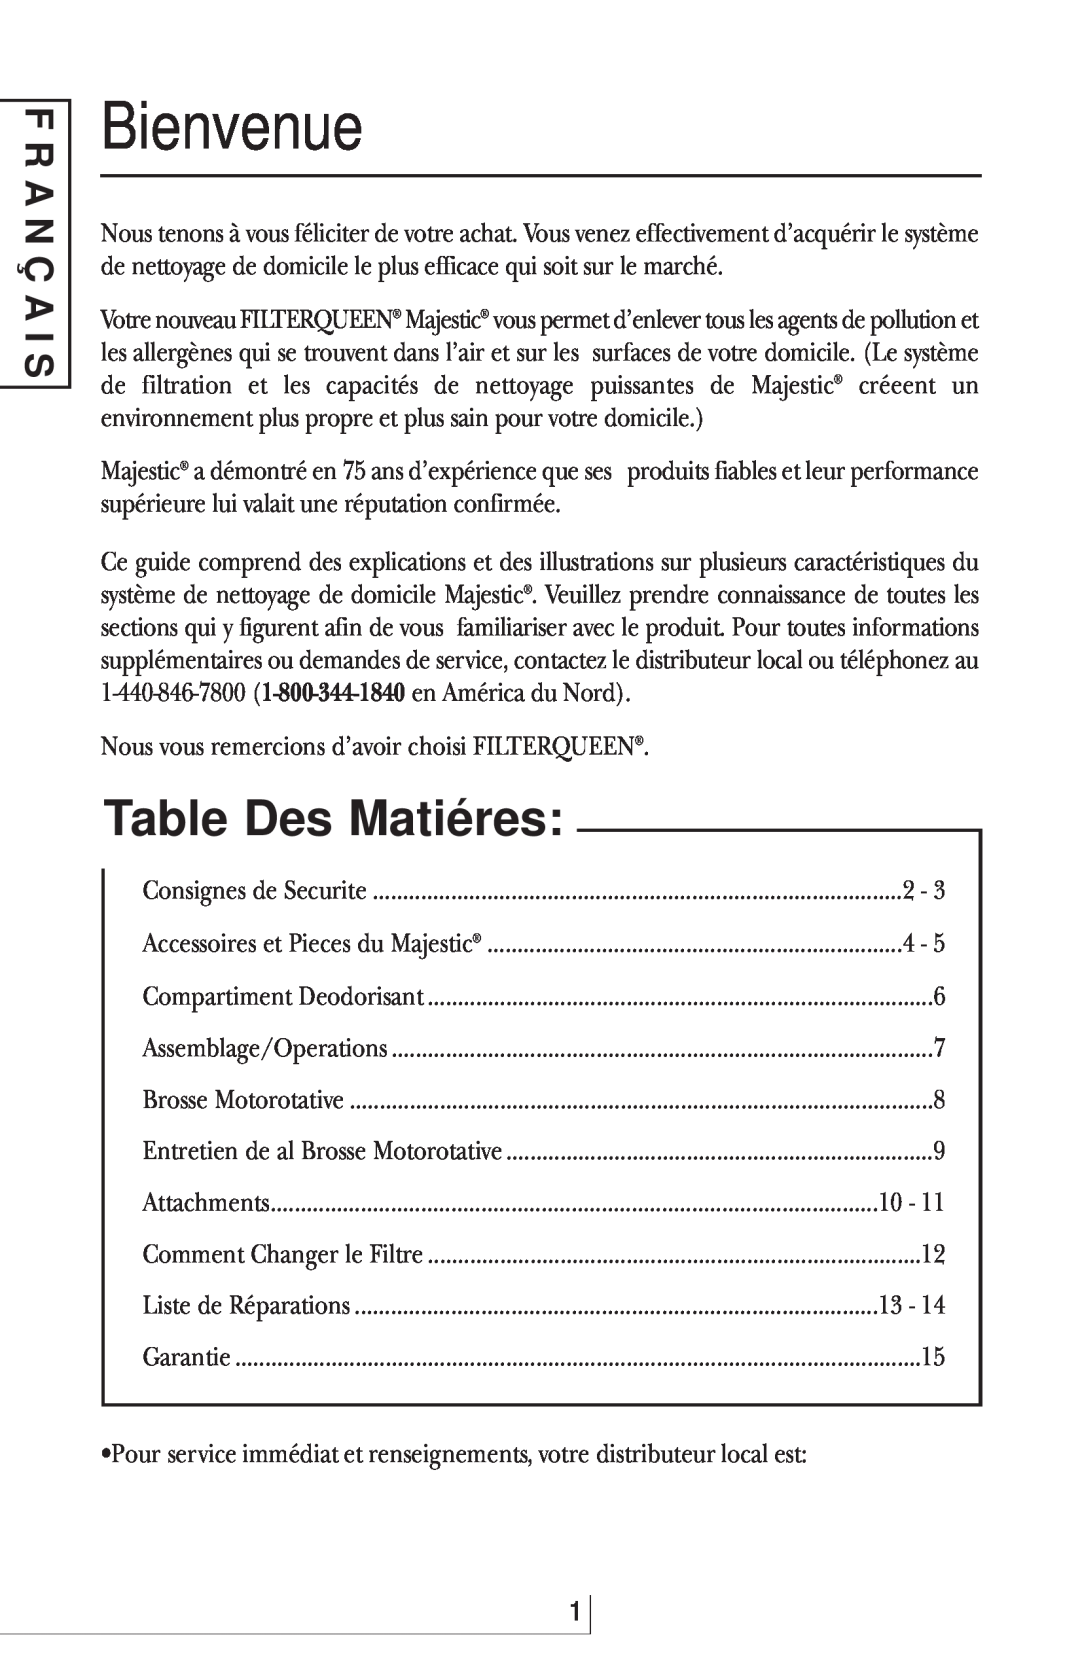 Filter Queen Majestic High-Filtration Surface Cleaner manual Bienvenue, Table Des Matiéres, F R A N Ç A I S 